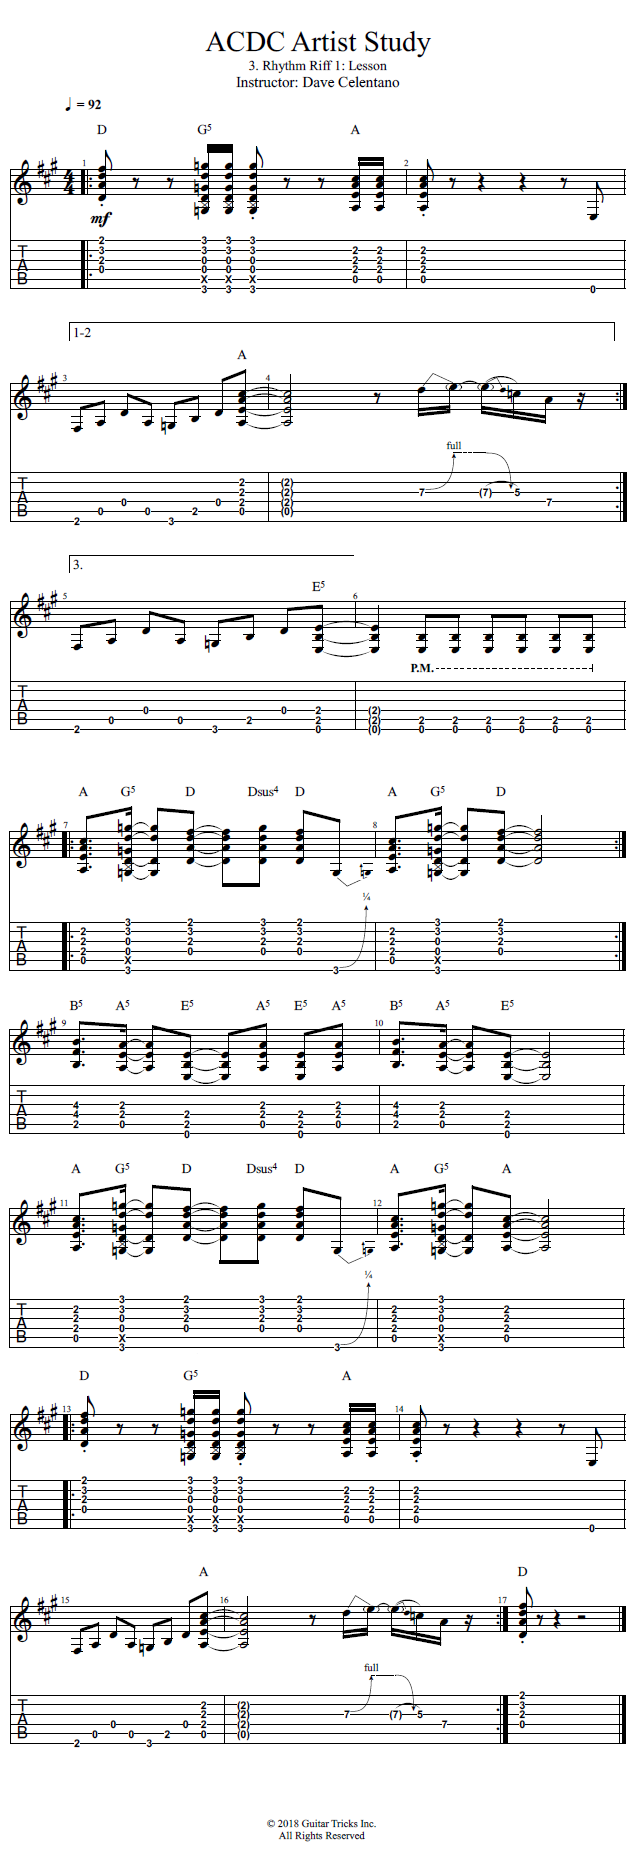 Rhythm Riff 1: Lesson song notation